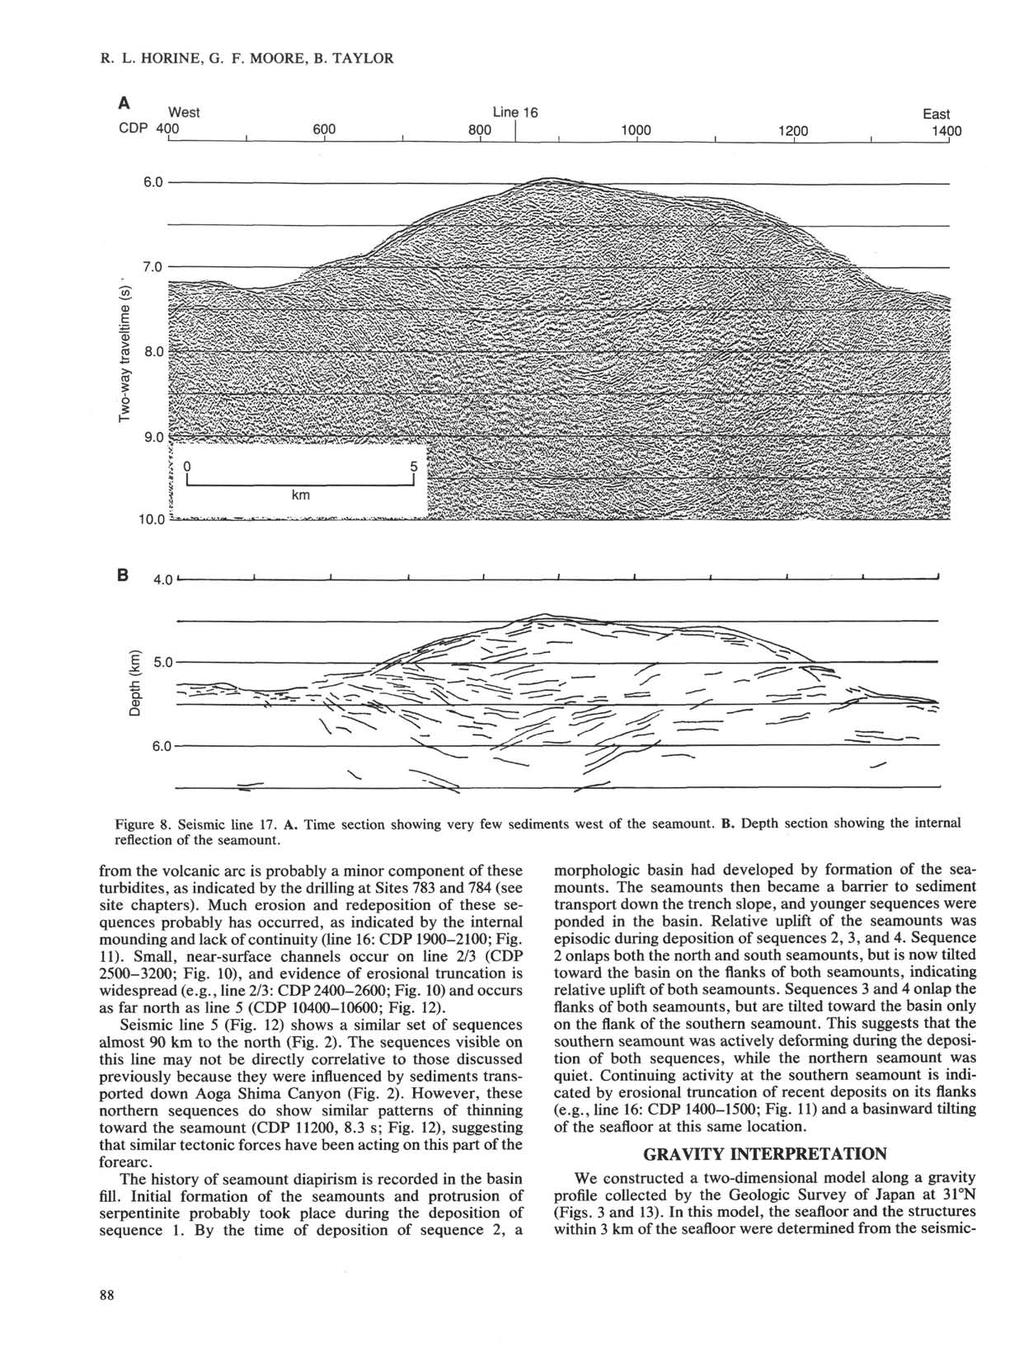 R. L. HORINE, G. F. MOORE, B. TAYLOR West CDP 400 600 Line 16 800 1000 1200 i East 1400 9.0 10.0 s - B 4.0 «- Figure 8. Seismic line 17. A.